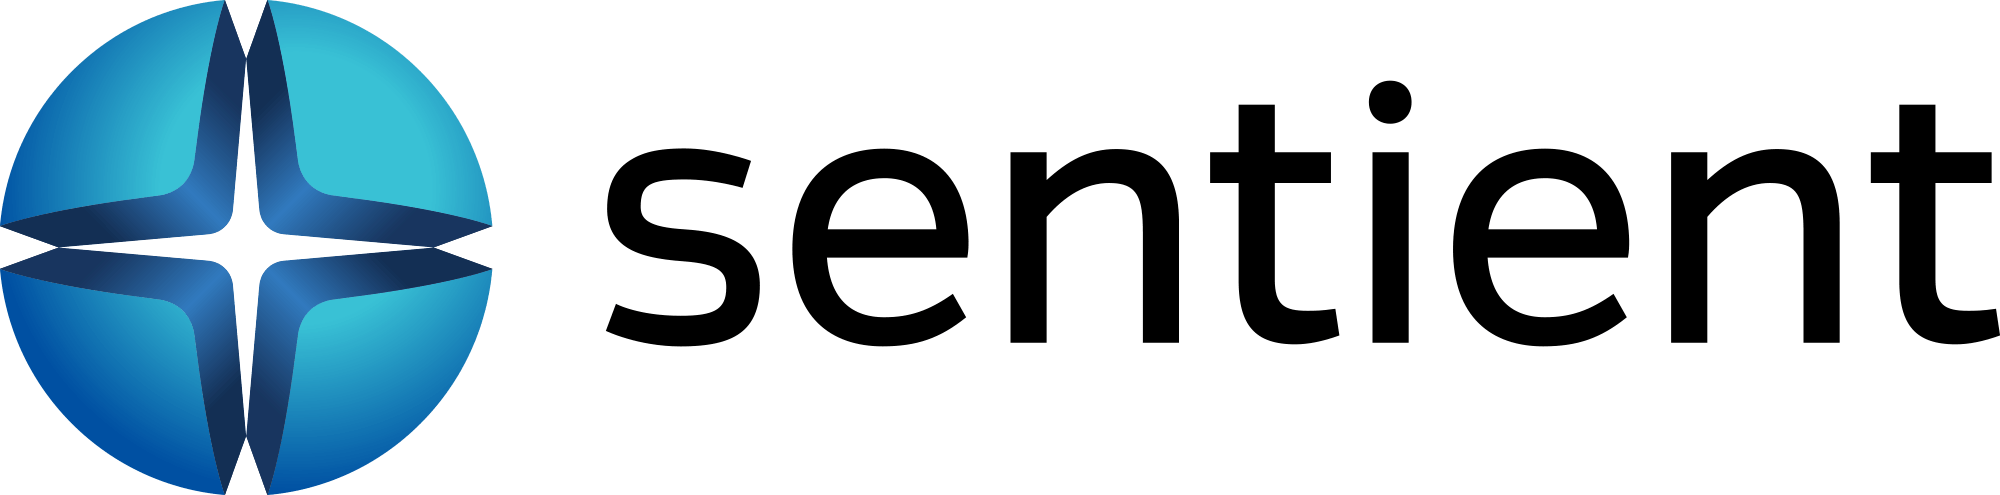 Evolv acquired Sentient Ascend™, a world-famous conversion optimization platform in March 2019